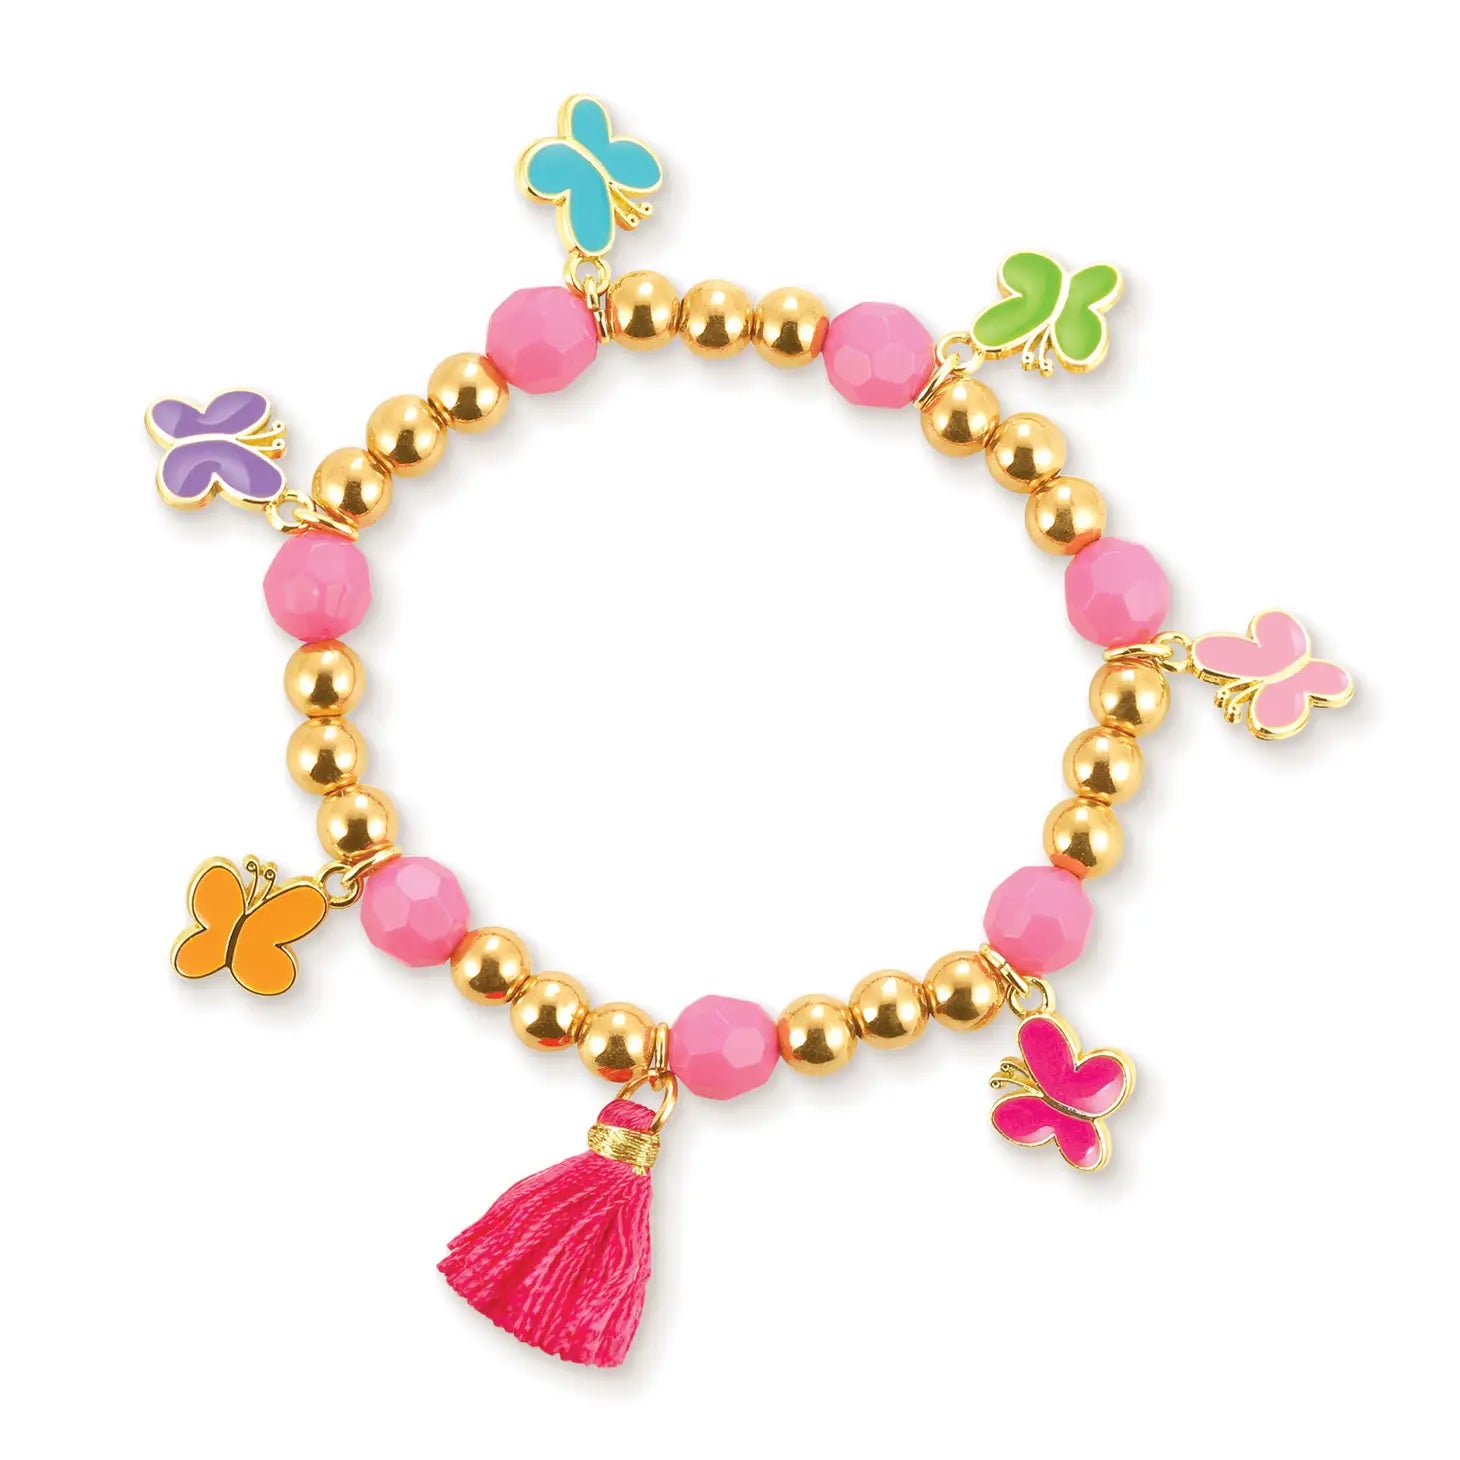 Beaded Bracelet with Pink Tassel - Lulie